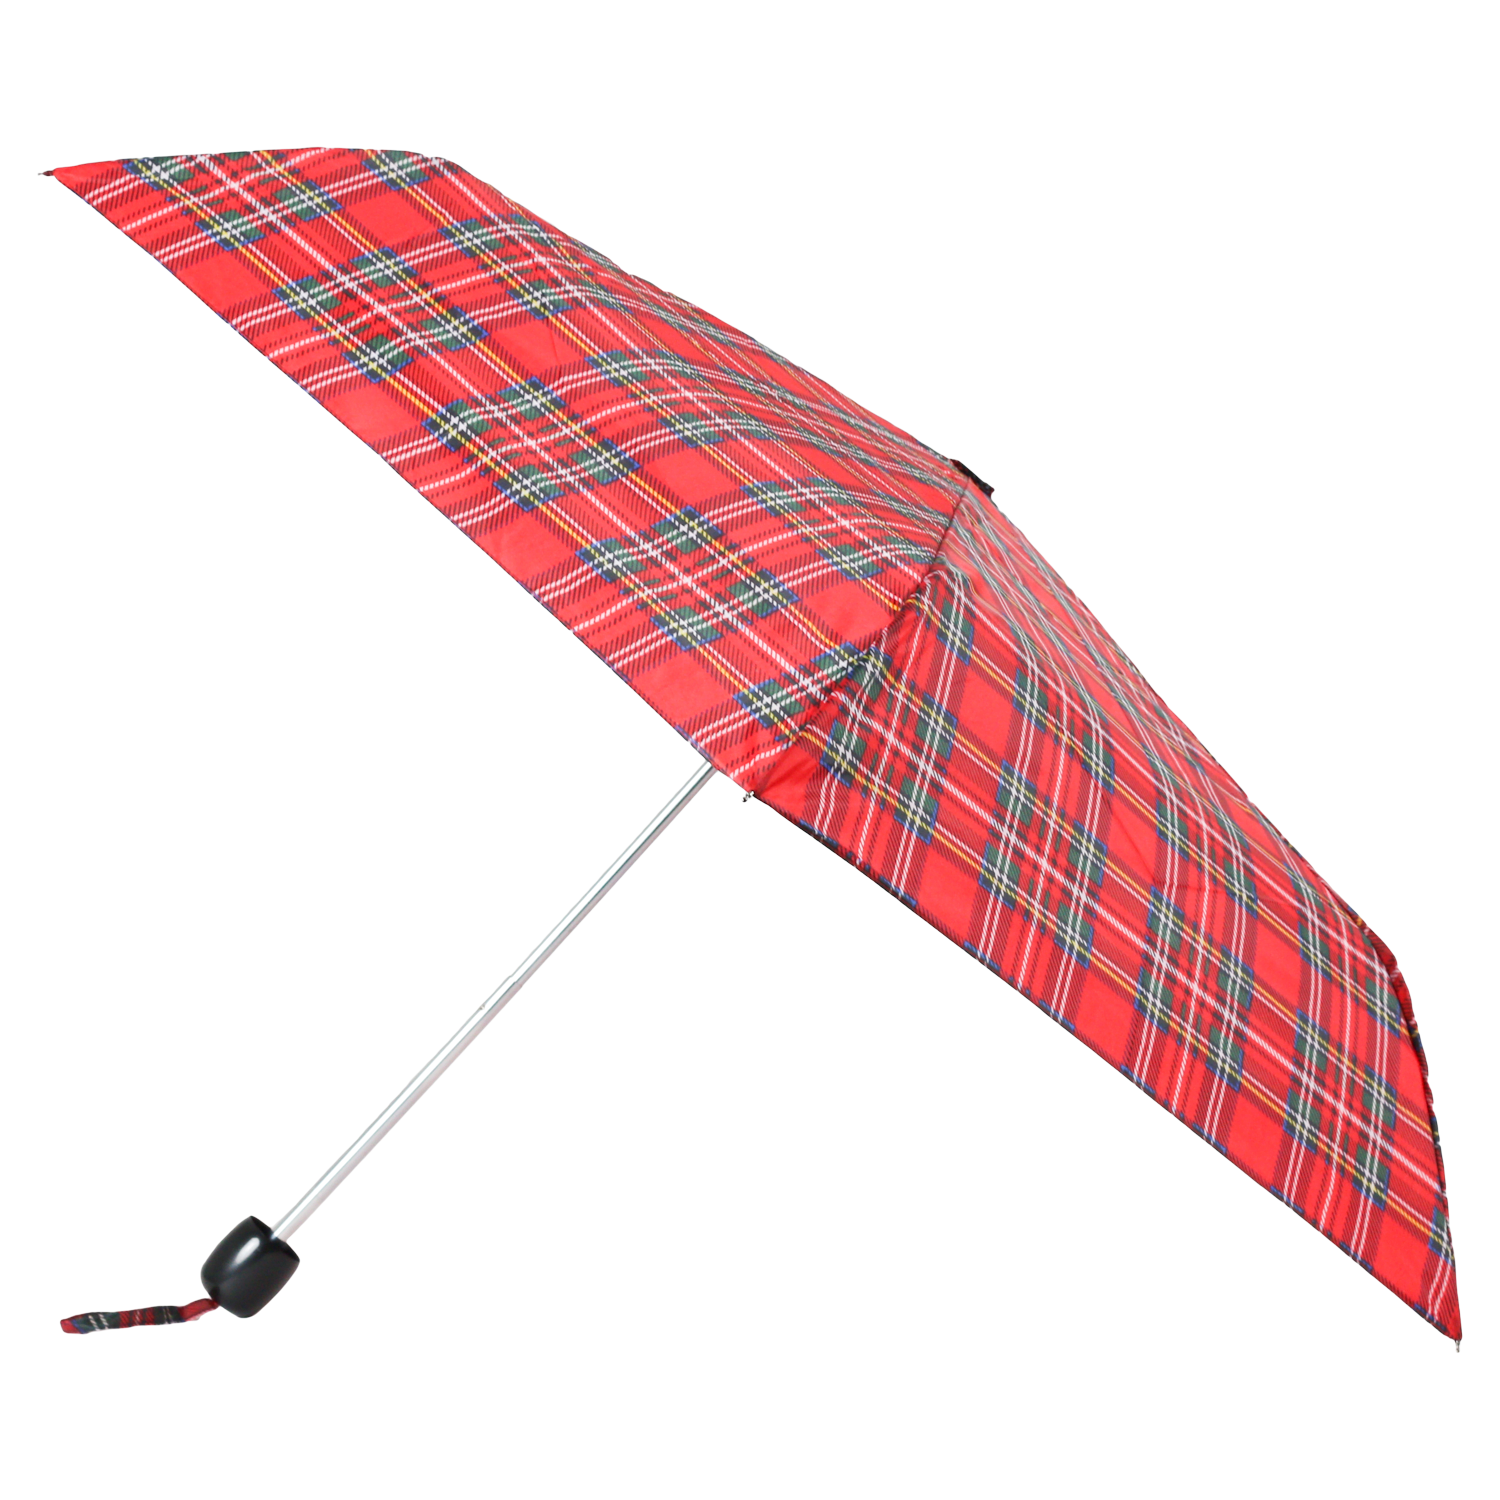 Scottish Tartan Plaid Pattern Folding Rain Umbrella Parasol Windproof Travel Sun Umbrella Compact 